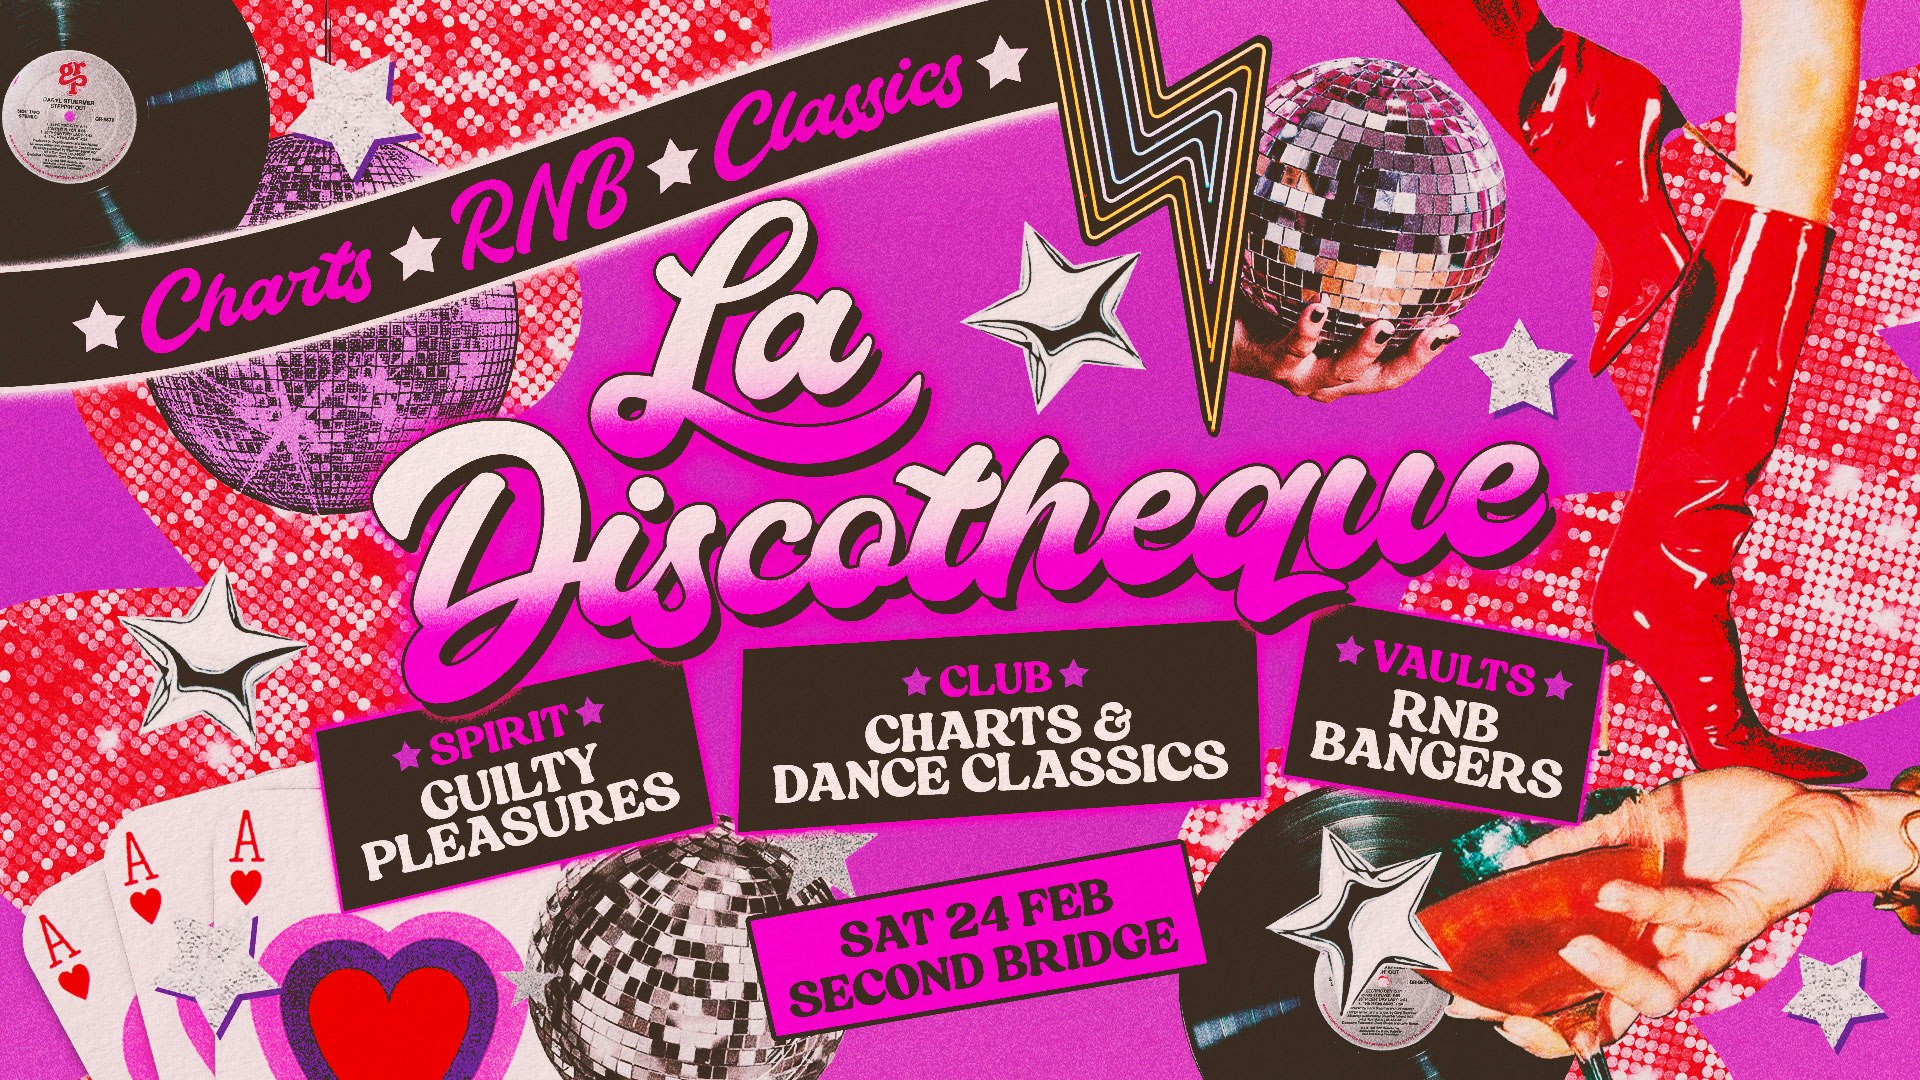 La Discotheque: Guilty Pleasures & Dancefloor Classics [£1 Tickets]